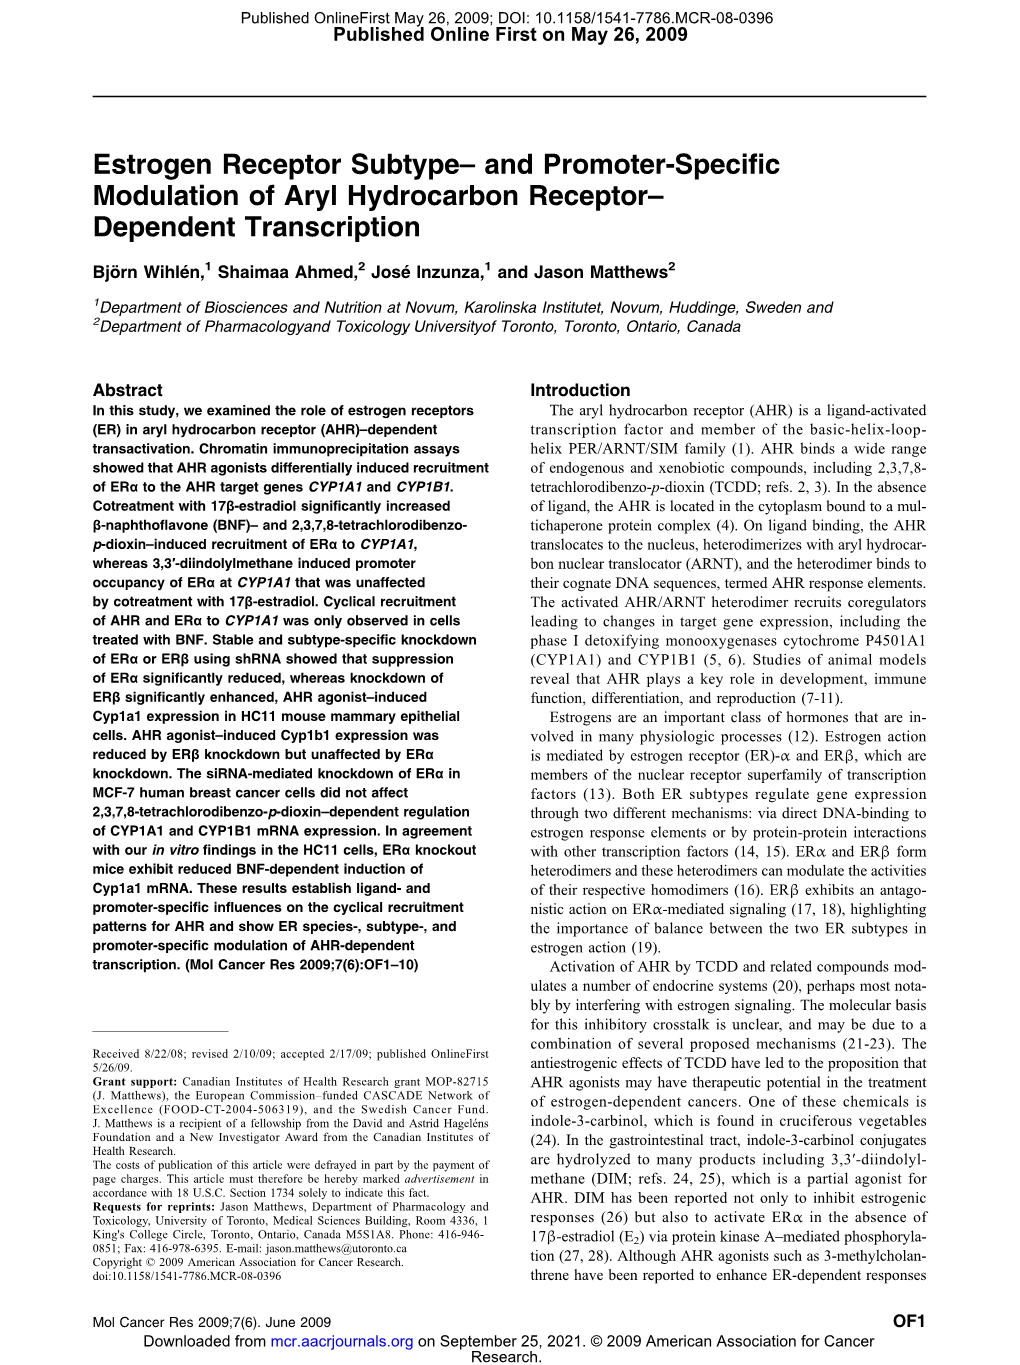 Estrogen Receptor Subtype– and Promoter-Specific Modulation of Aryl Hydrocarbon Receptor– Dependent Transcription